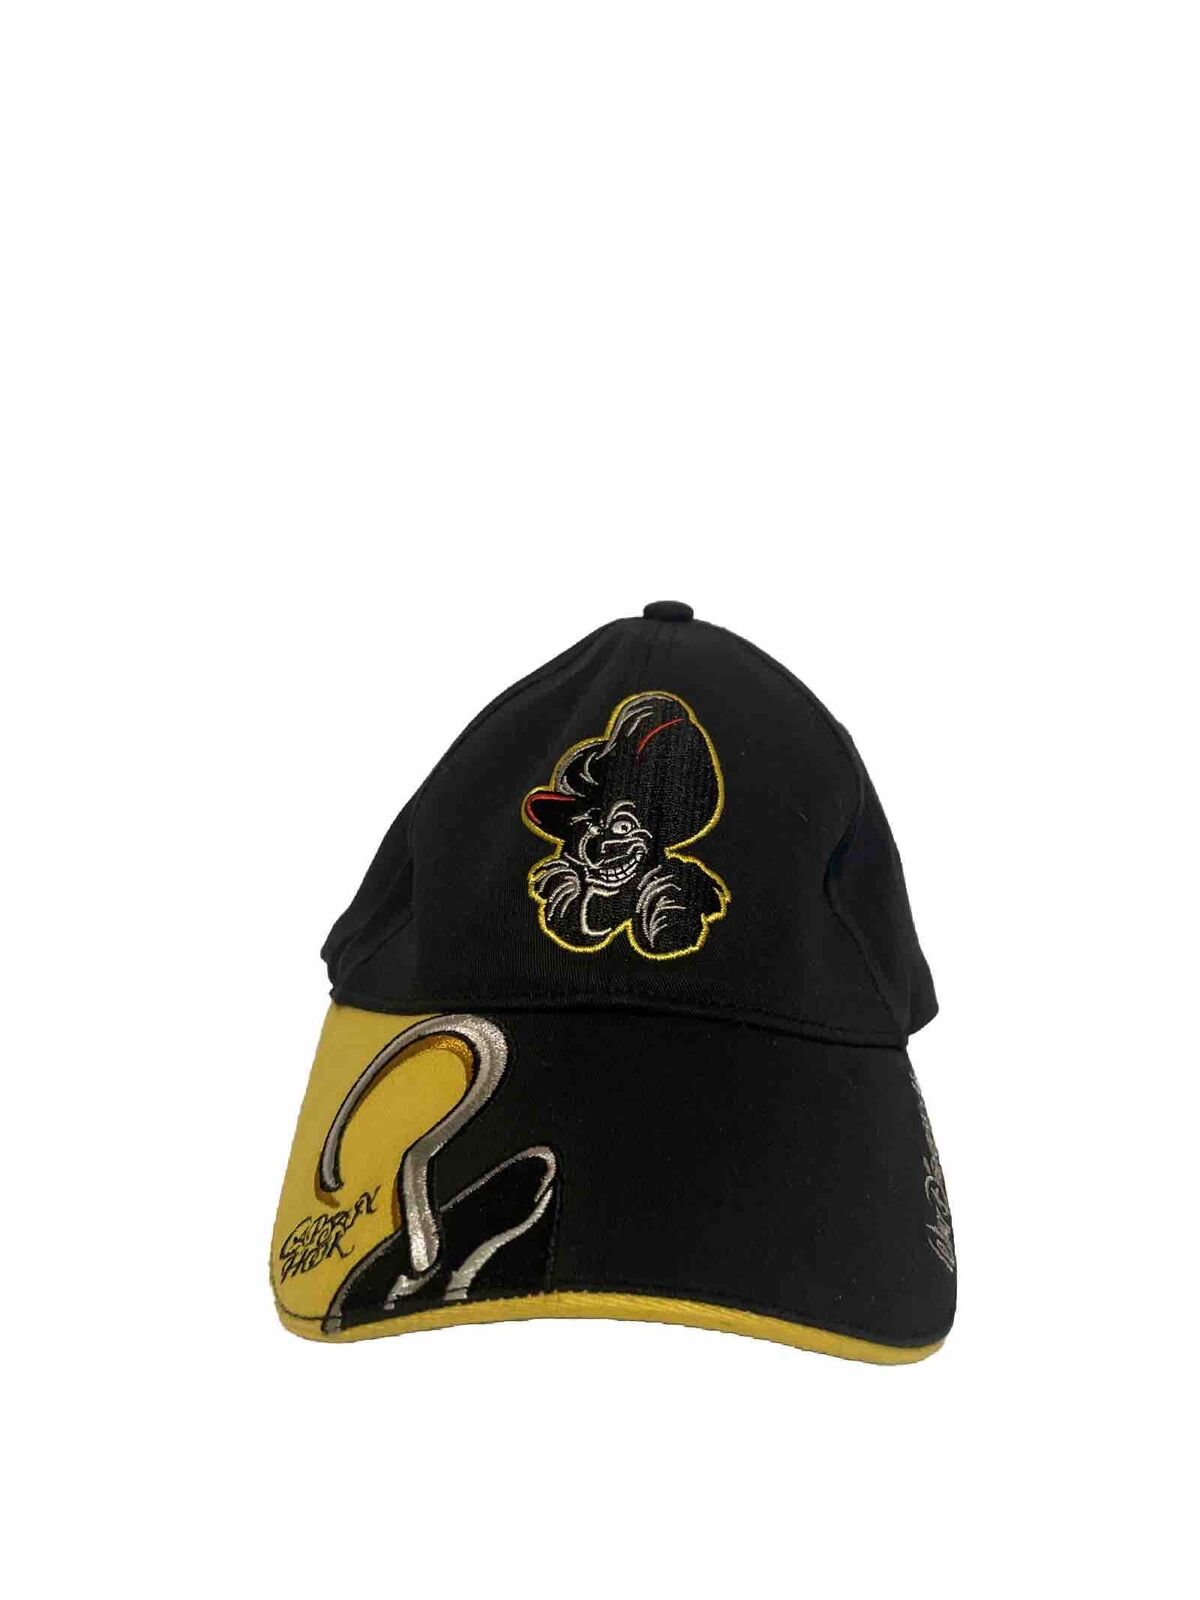 YOUTH Disney Disneyland Captain Hook Baseball Hat Embroidered